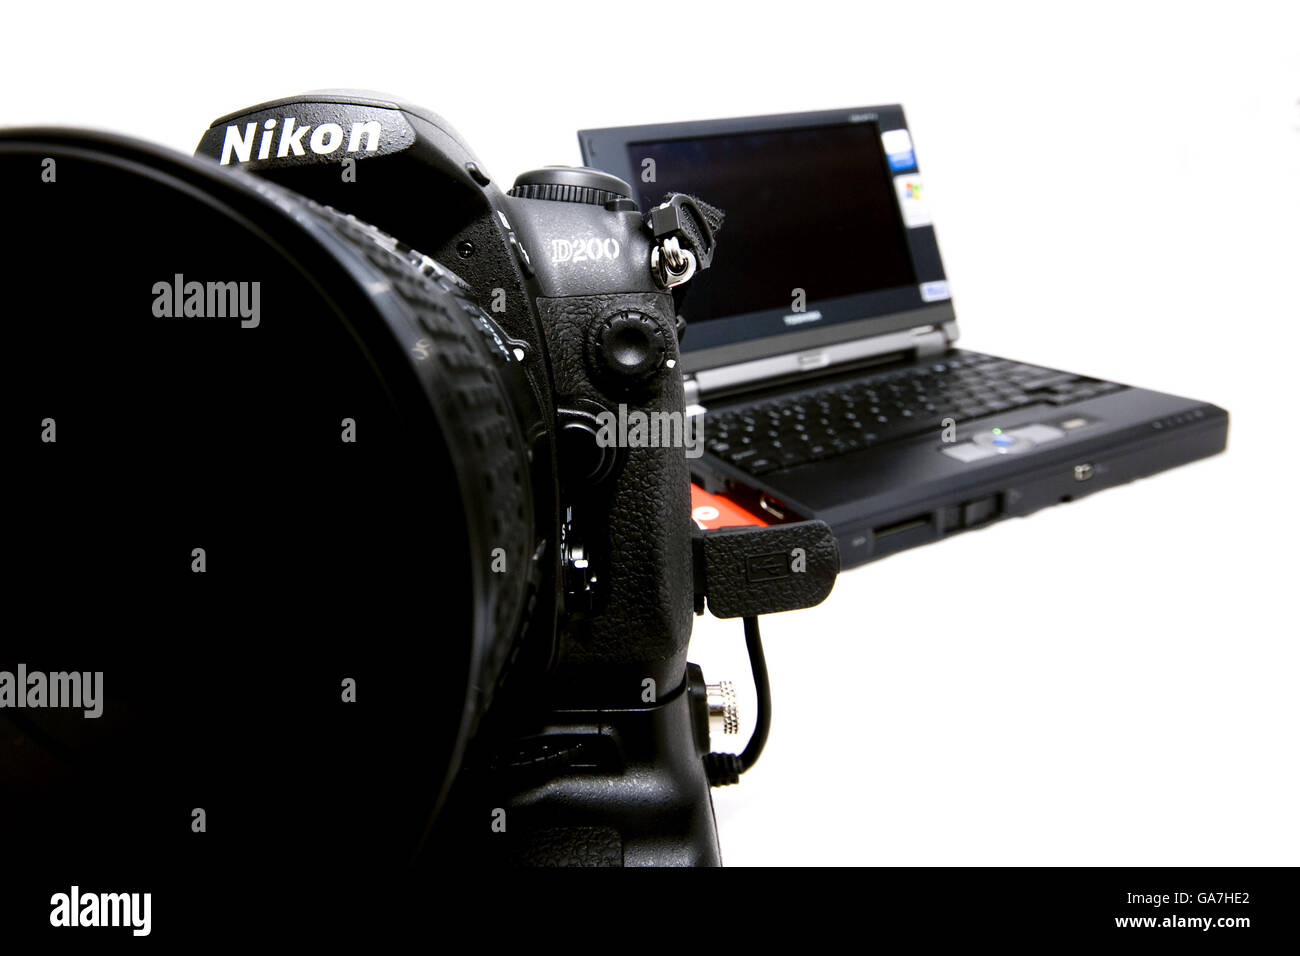 A Toshiba Libretto laptop with Nikon D200 digital SLR camera Stock Photo